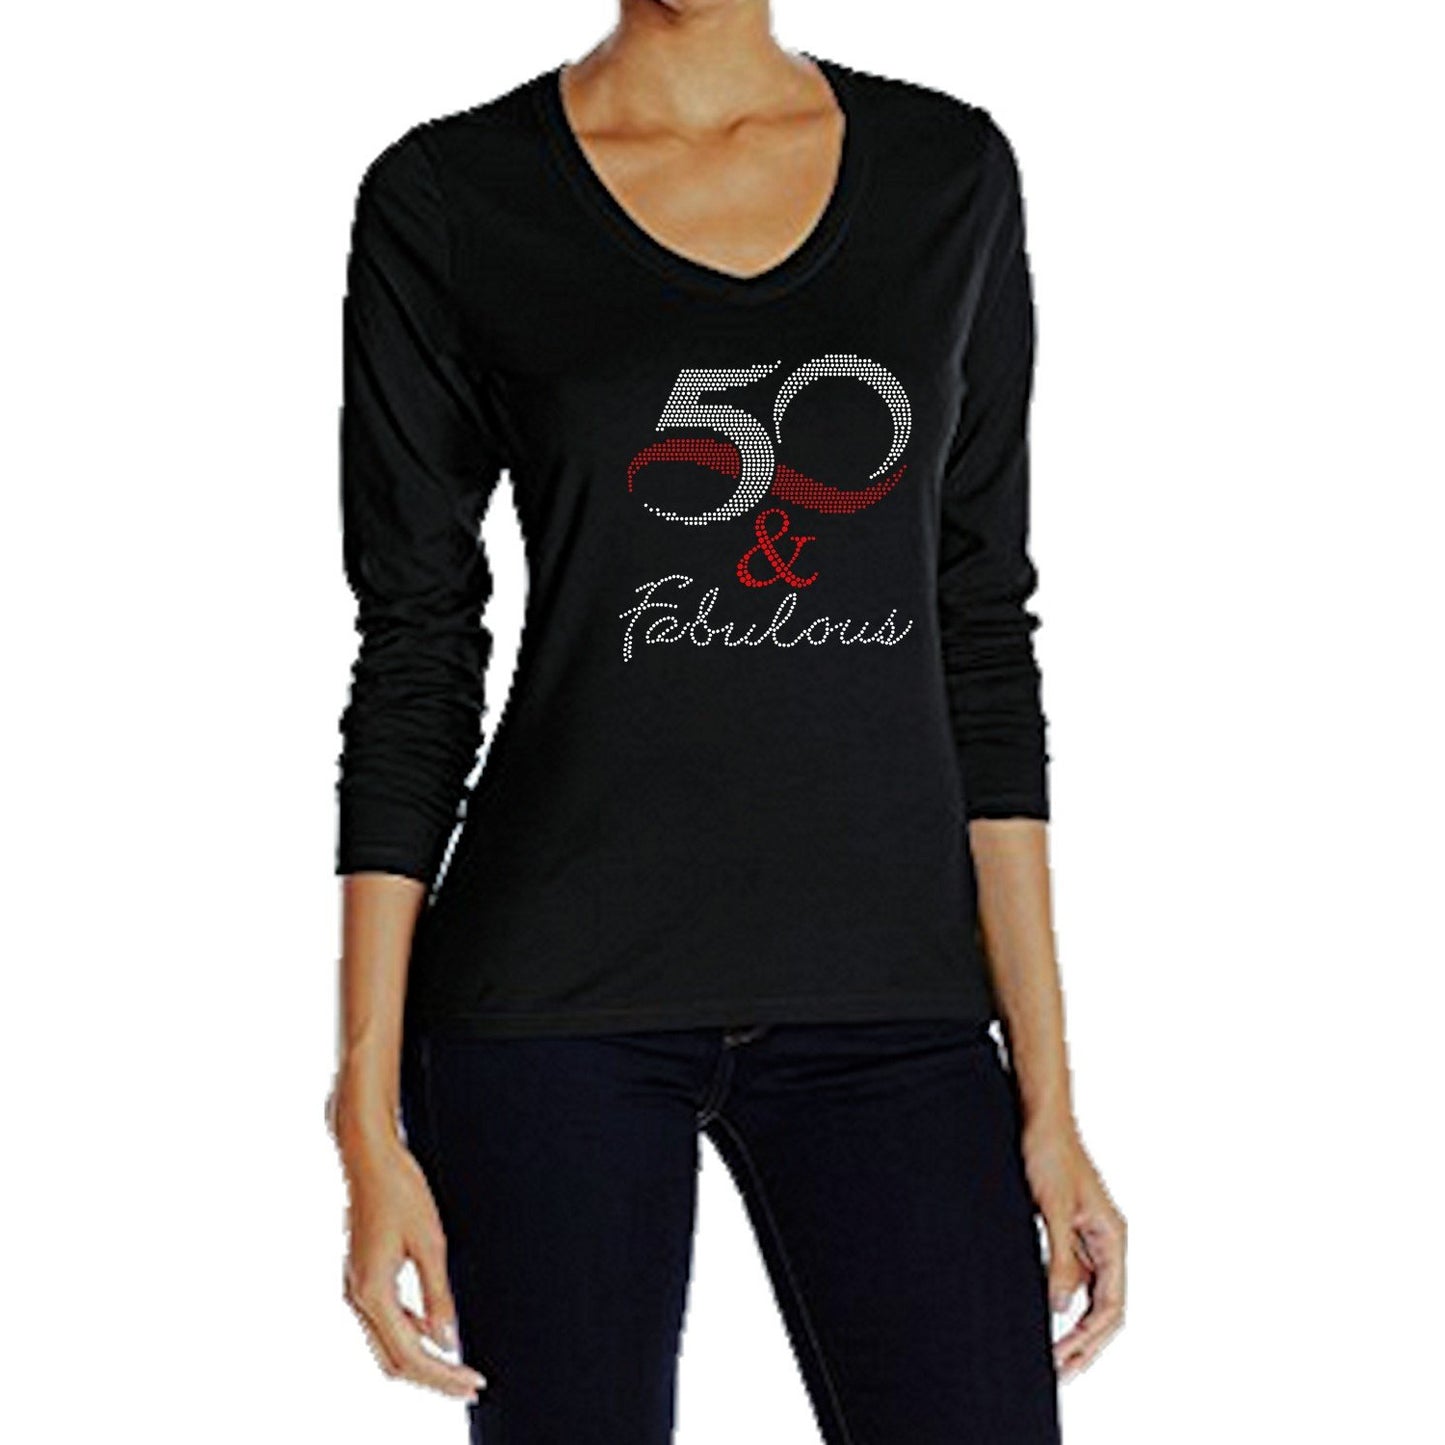 50 And Fabulous Rhinestone Long Sleeve T-Shirt-CO